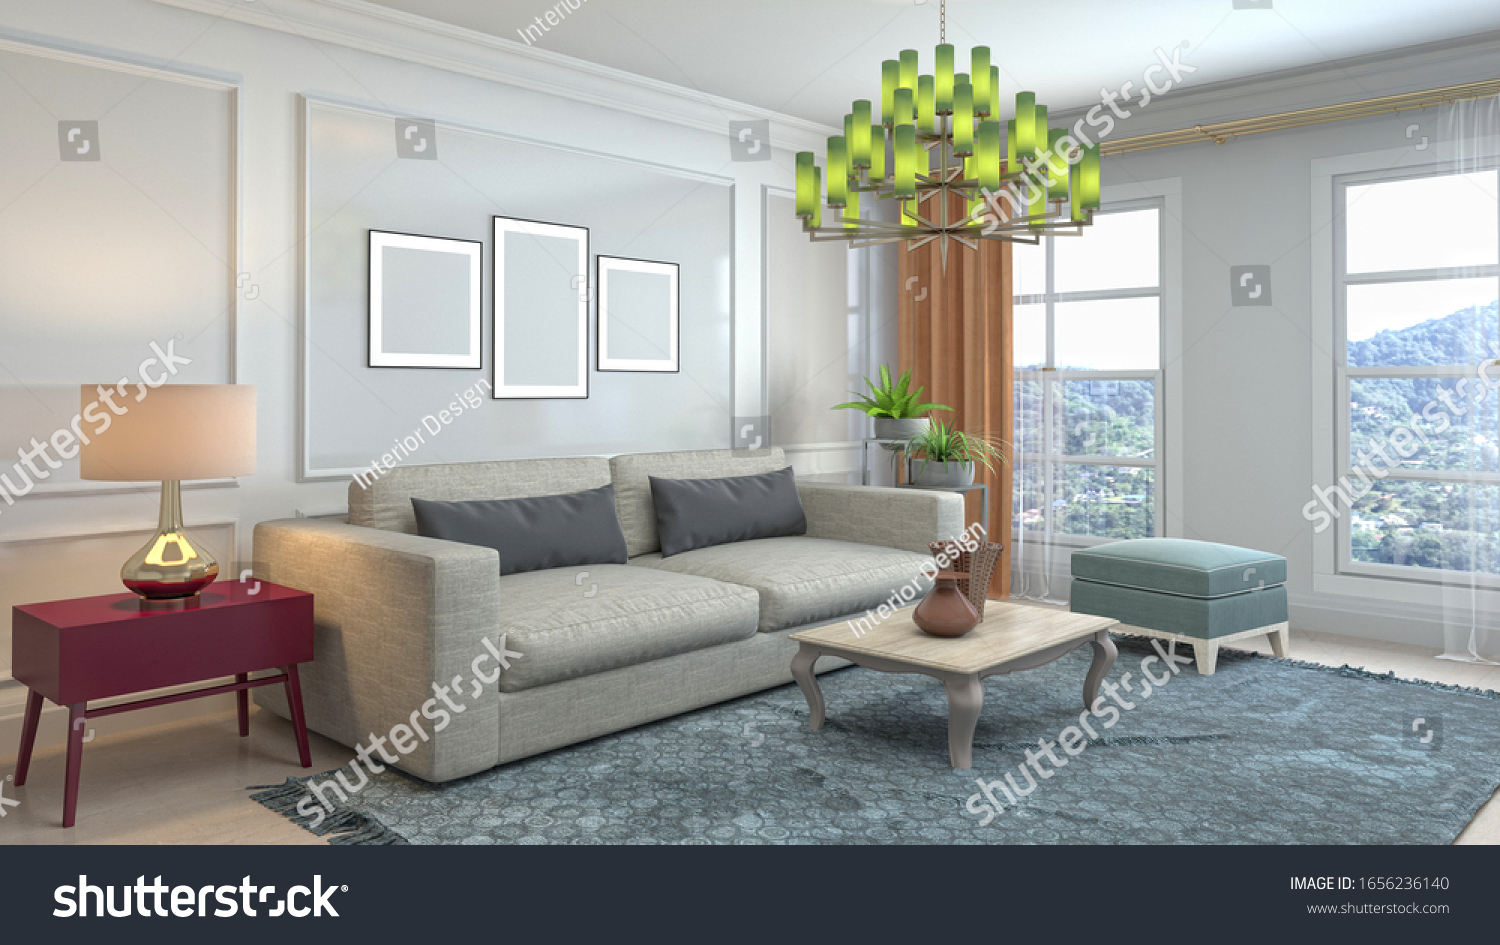 Interior of the living room. 3D illustration. #1656236140